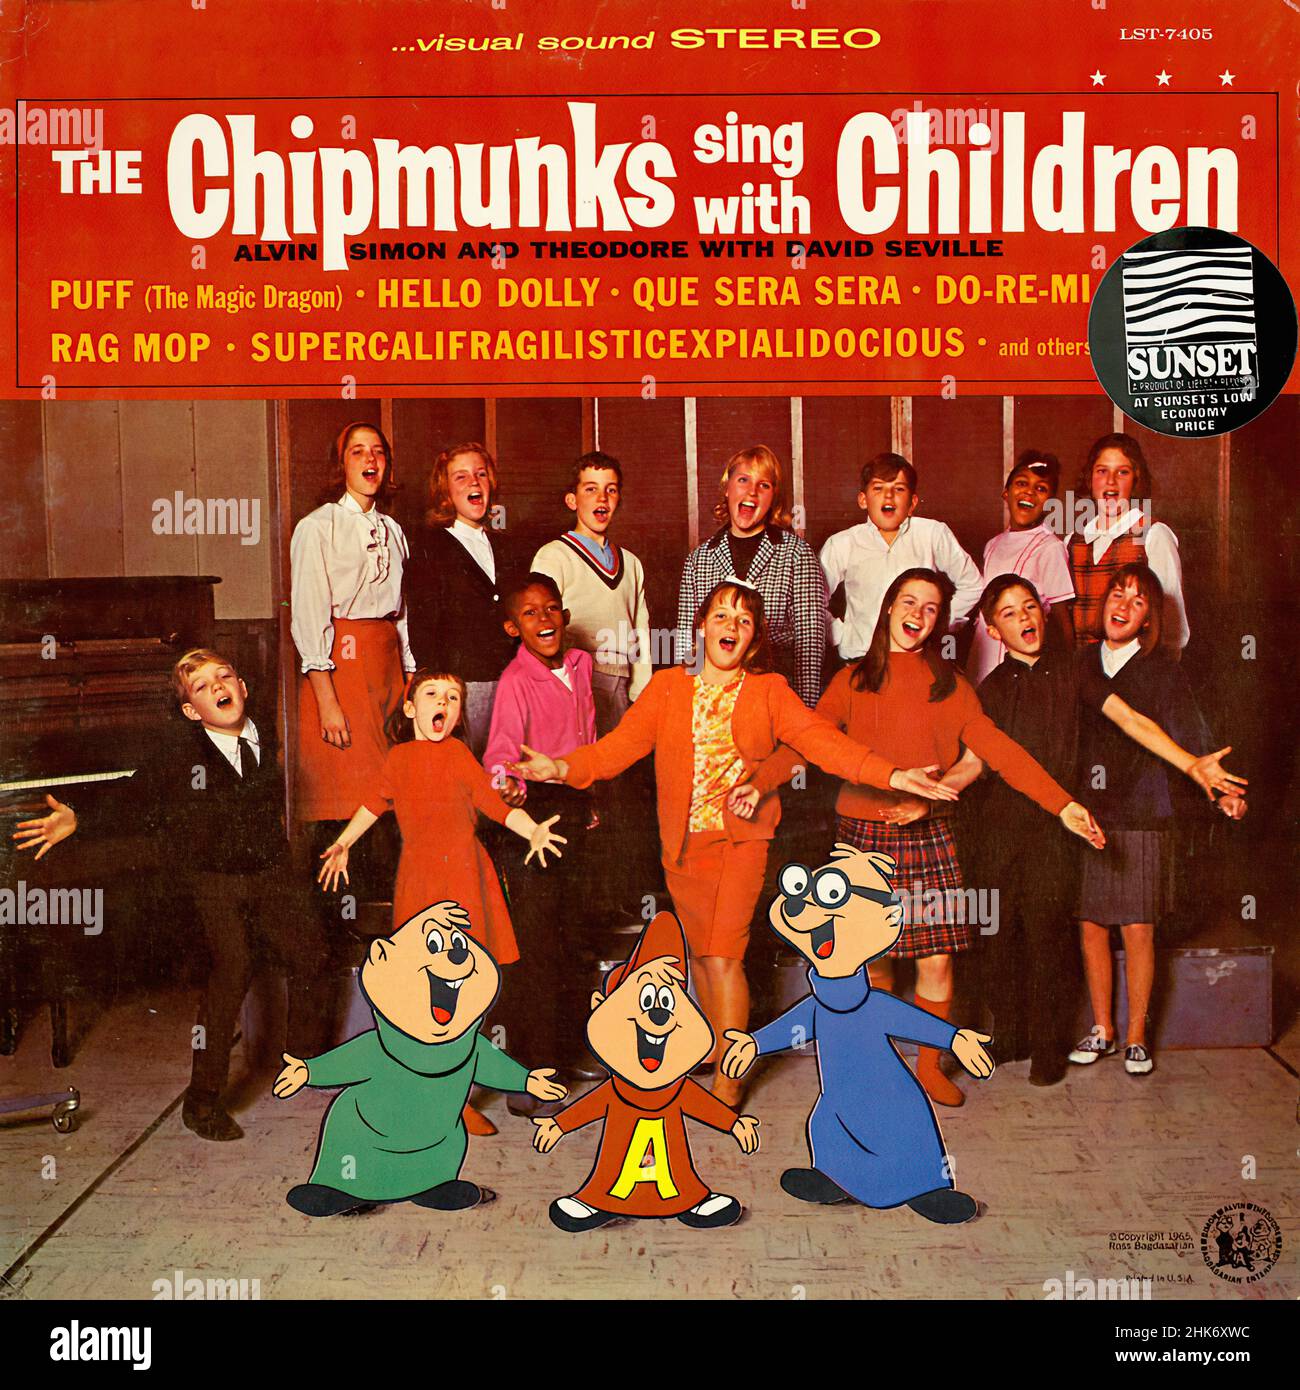 The Chipmunks Sing With Children - Vintage American Comedy Vinyl Album Stock Photo